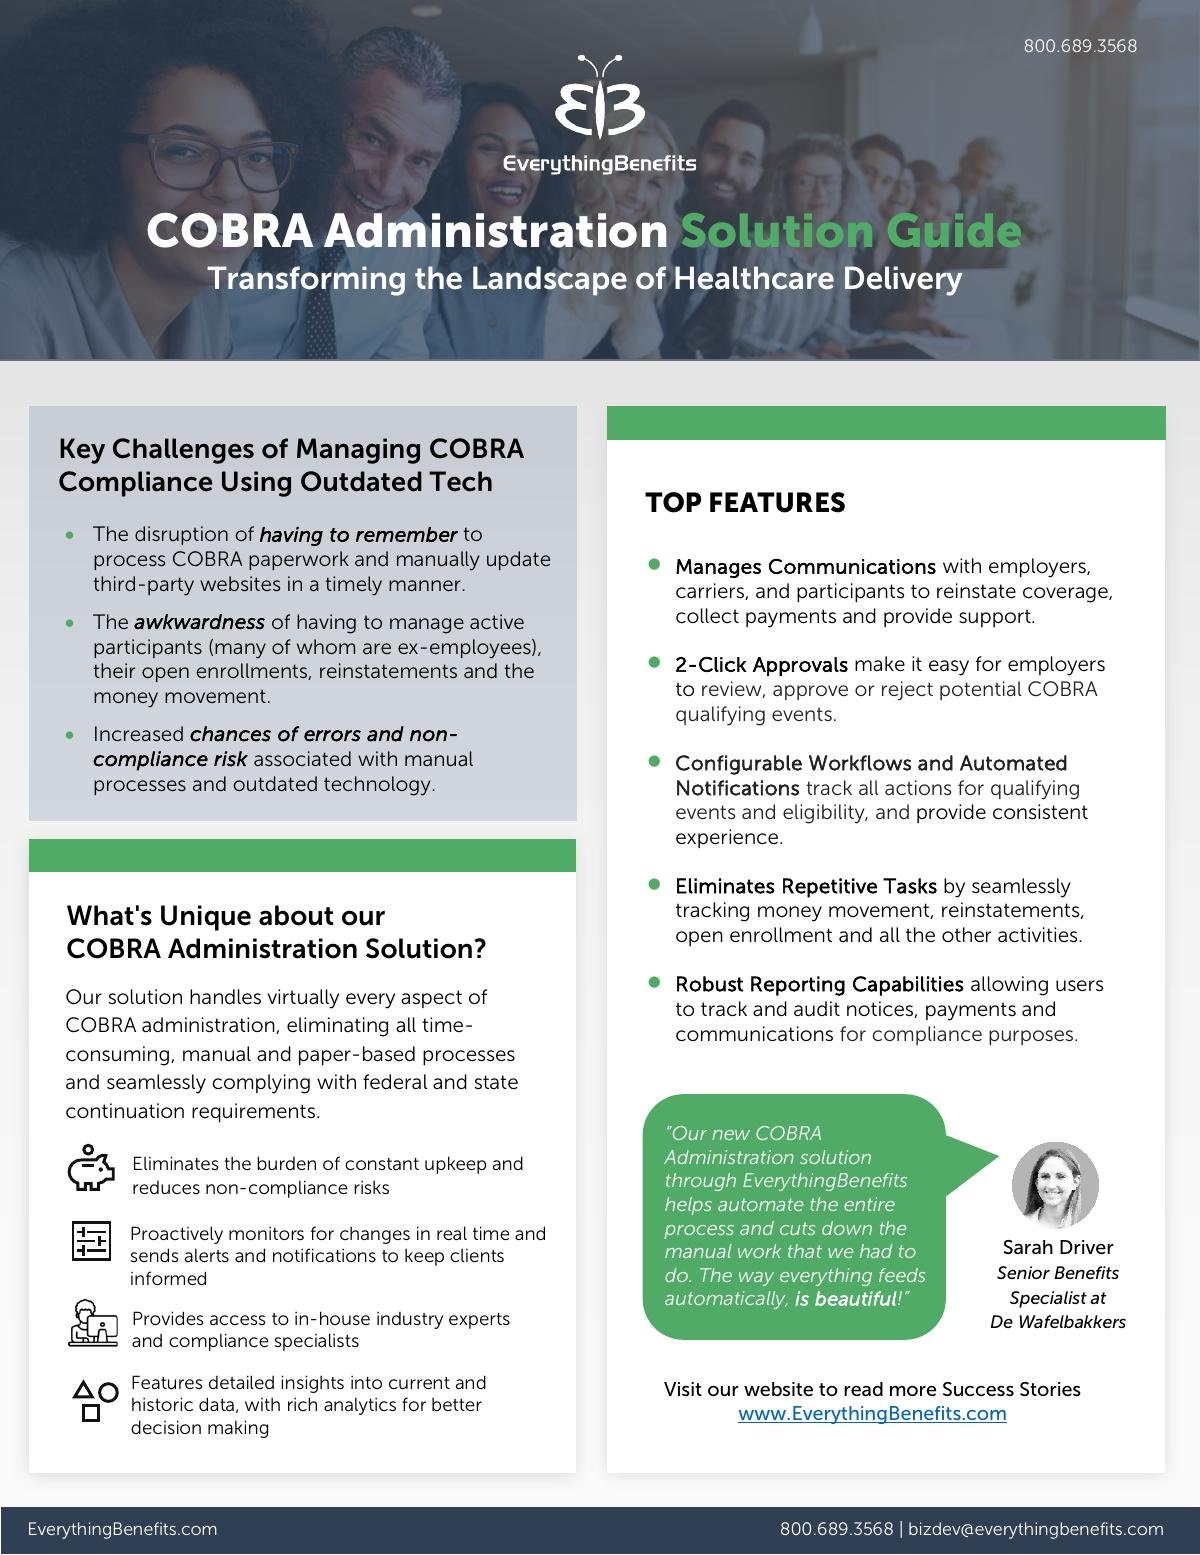 Automate COBRA Administration